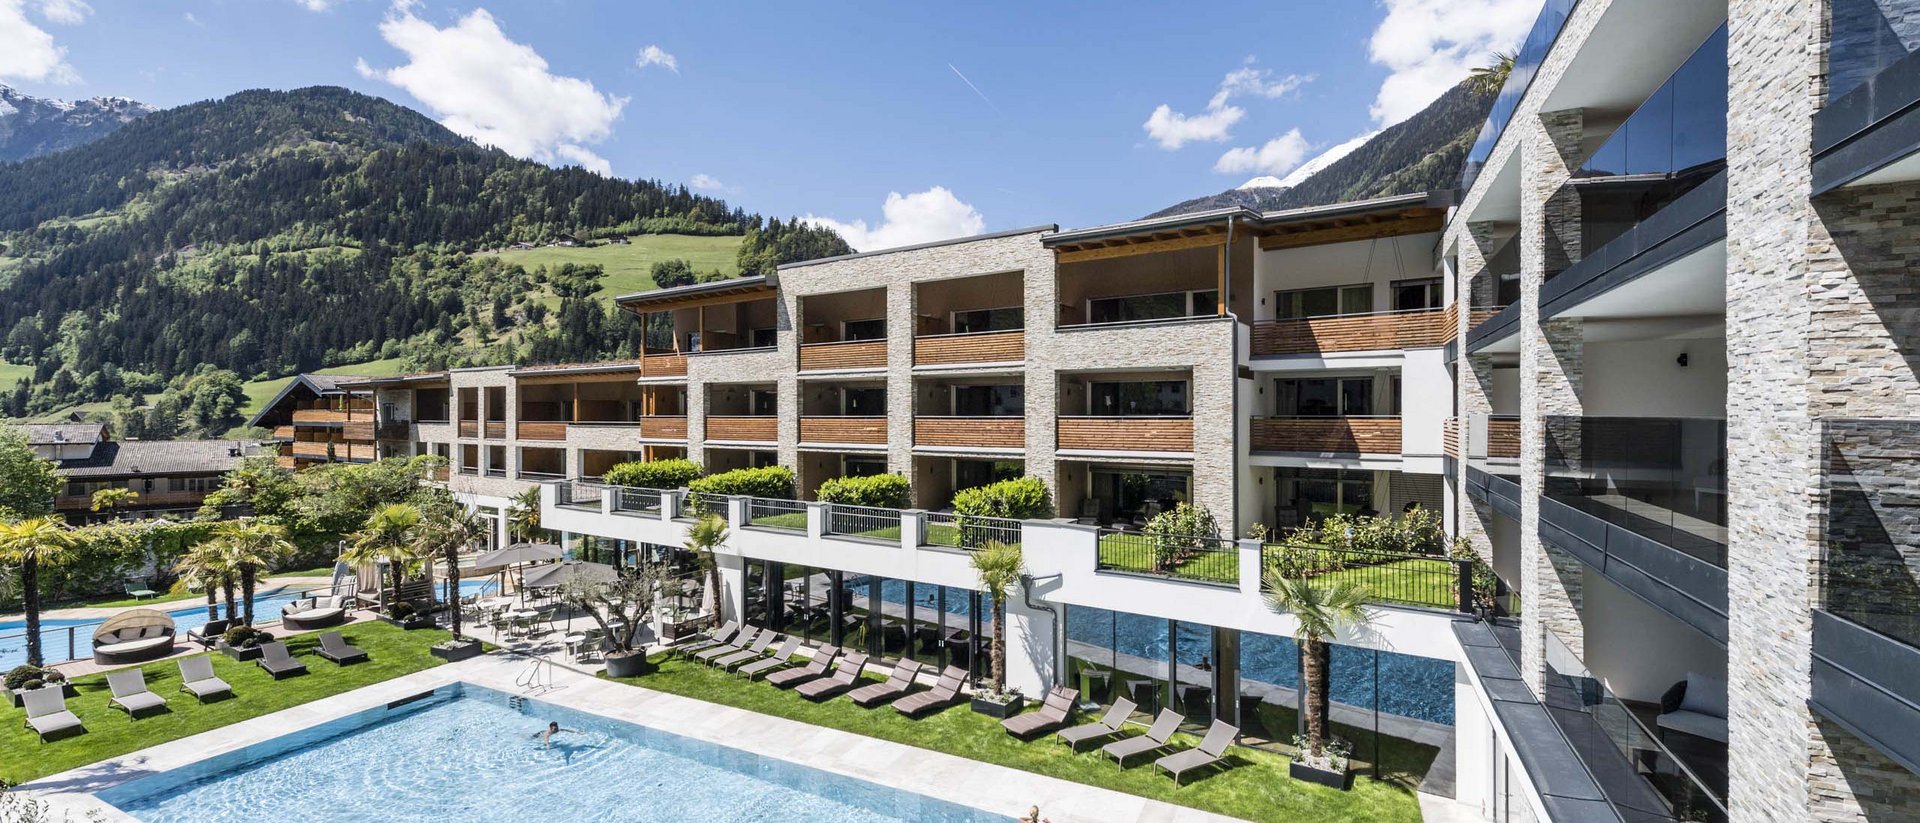 Lake Garda or Val Passiria/Passeiertal: our hotel options